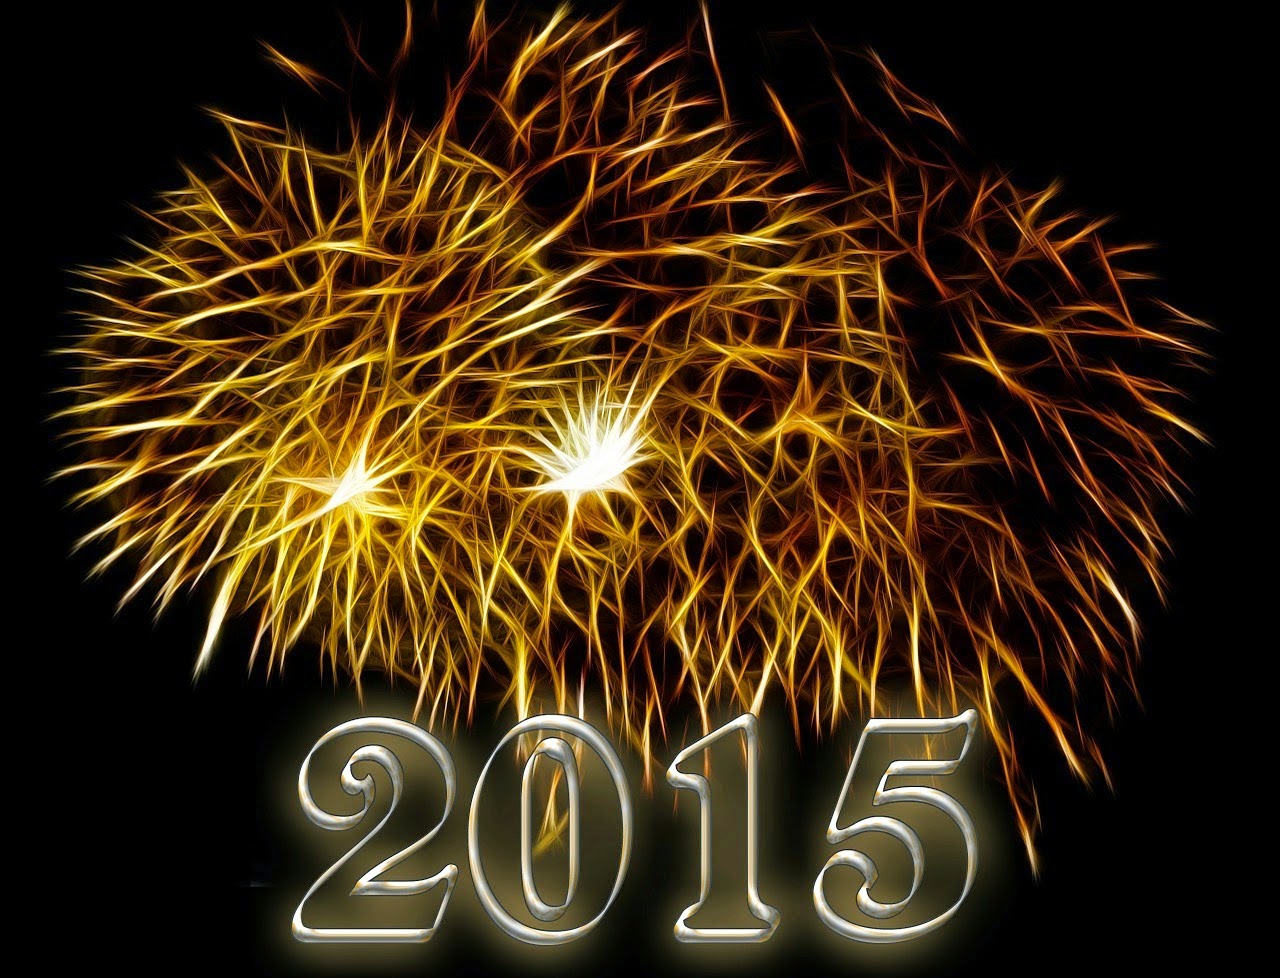 Koleksi Gambar Gambar Dp Bbm Bergerak Happy New Year 2015 Terbaru